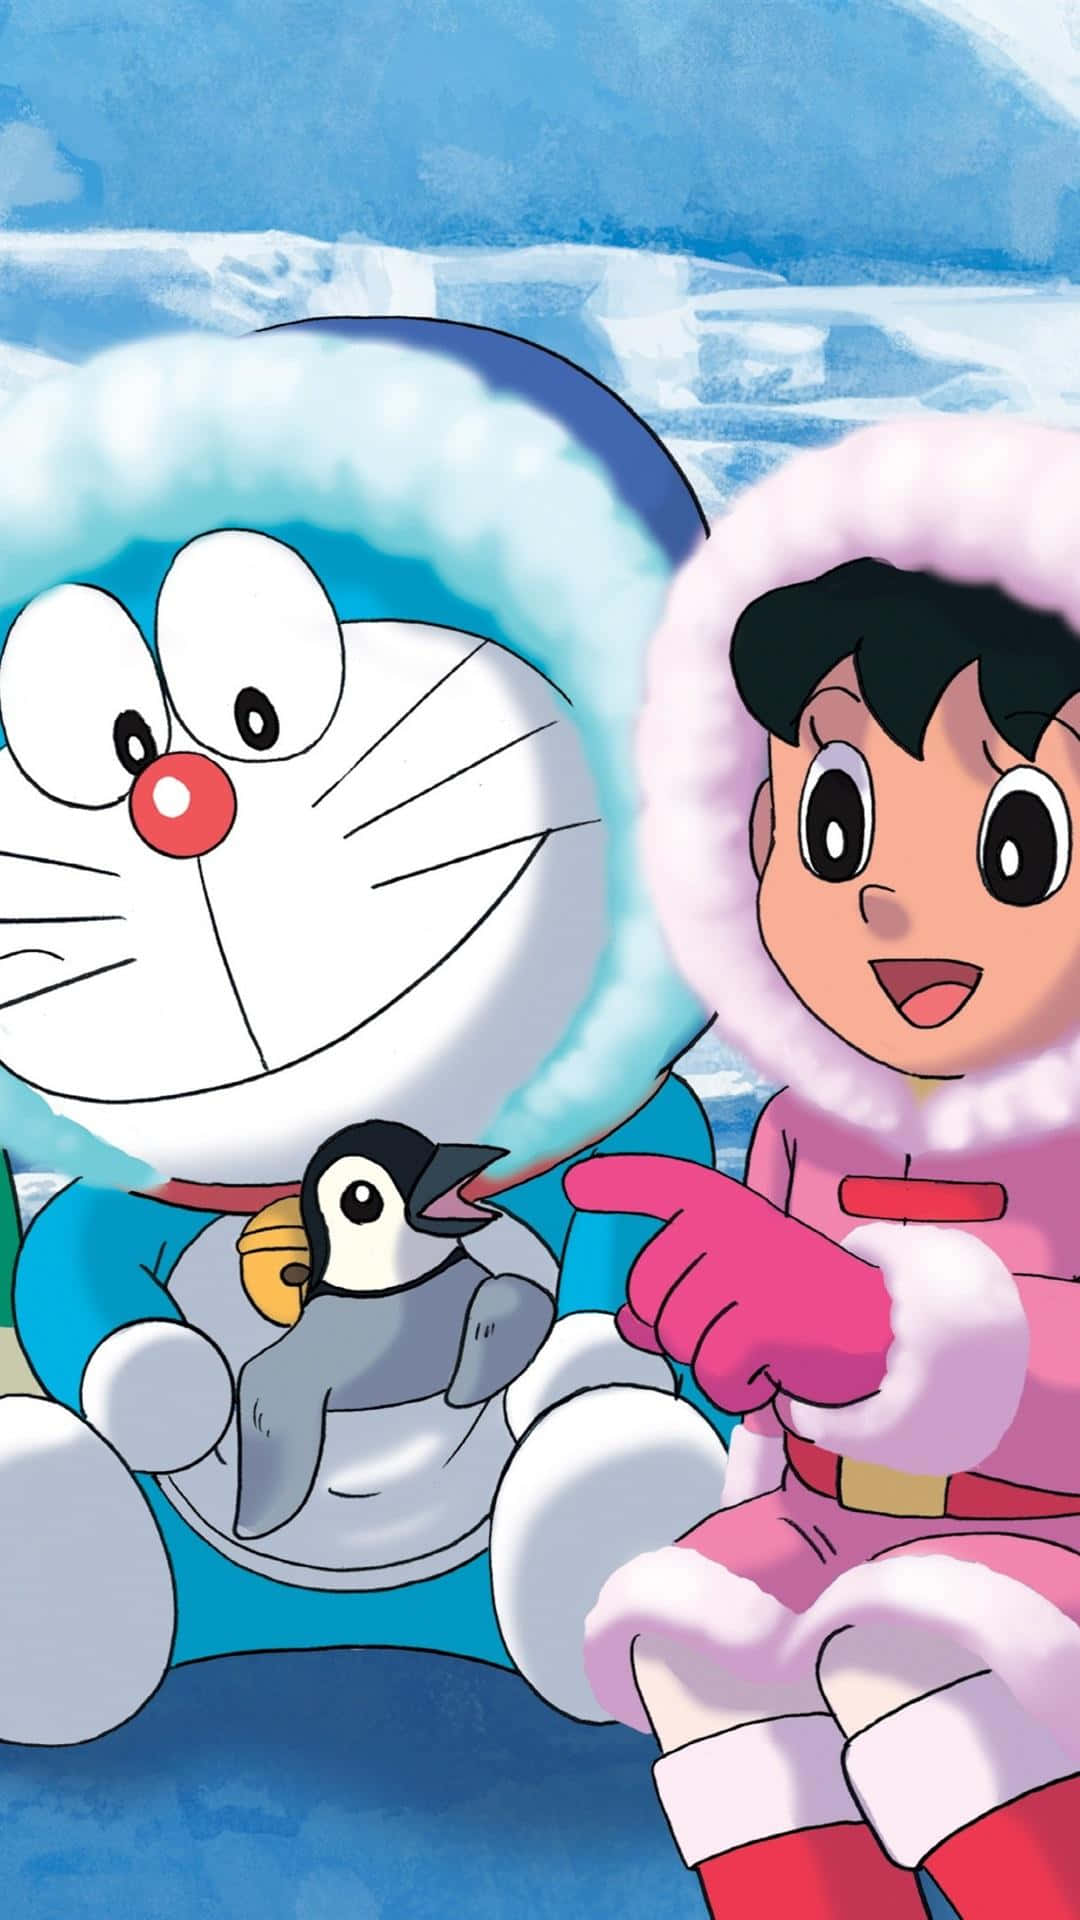 Fun Adventures Await in the Magical World of Doraemon